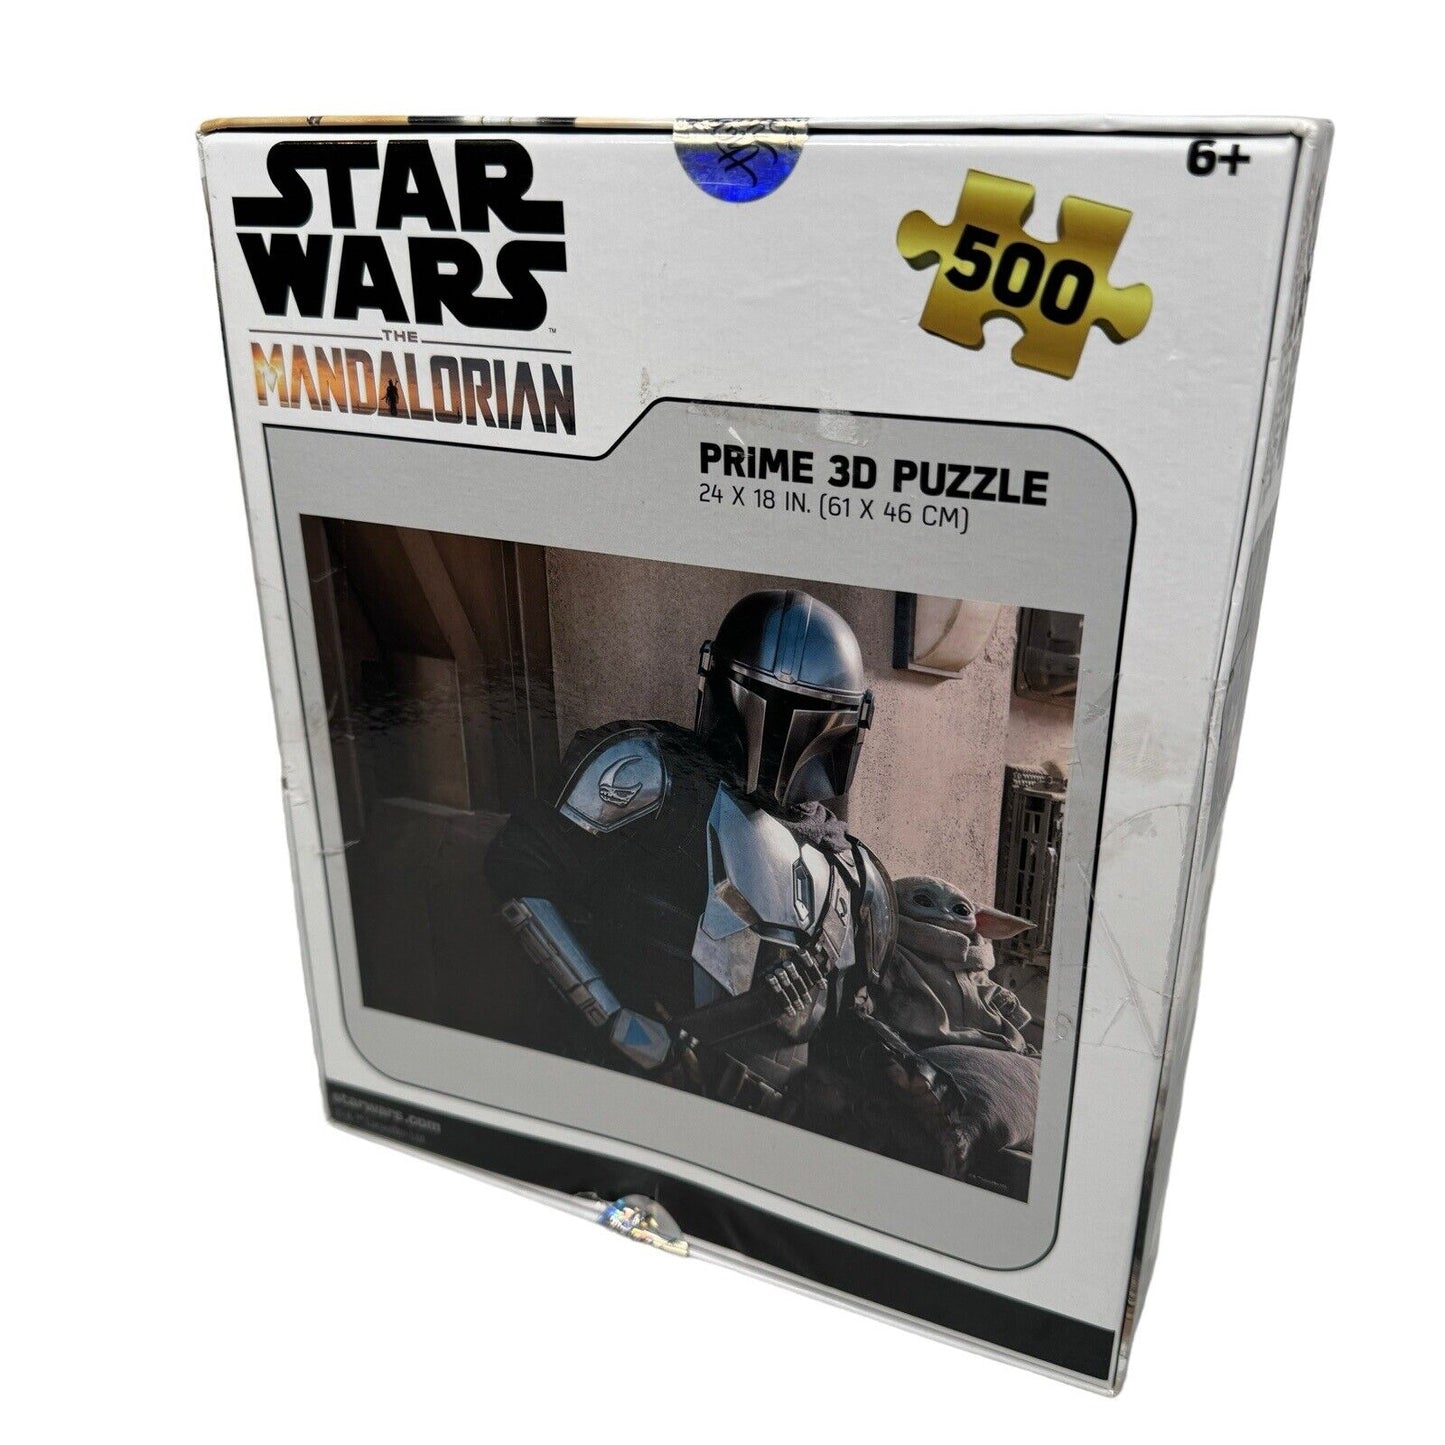 Disney Star Wars Prime 3D Puzzle The Mandalorian 500 PC 24 x 18 in Baby Yoda